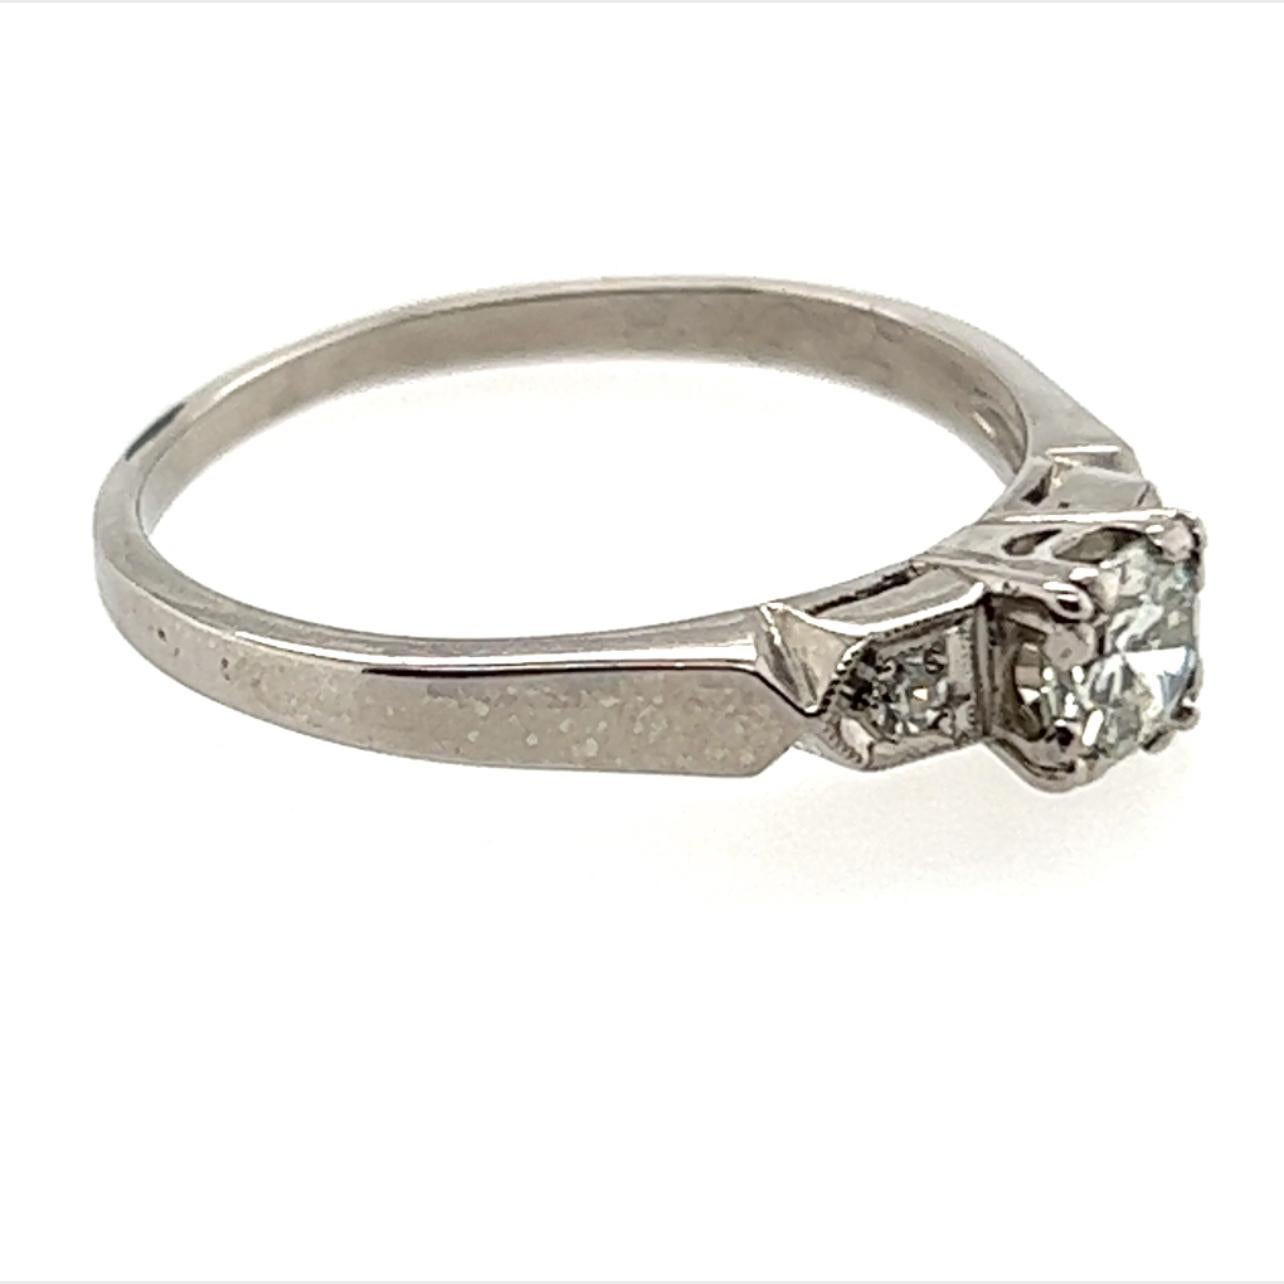 1930's platinum diamond ring